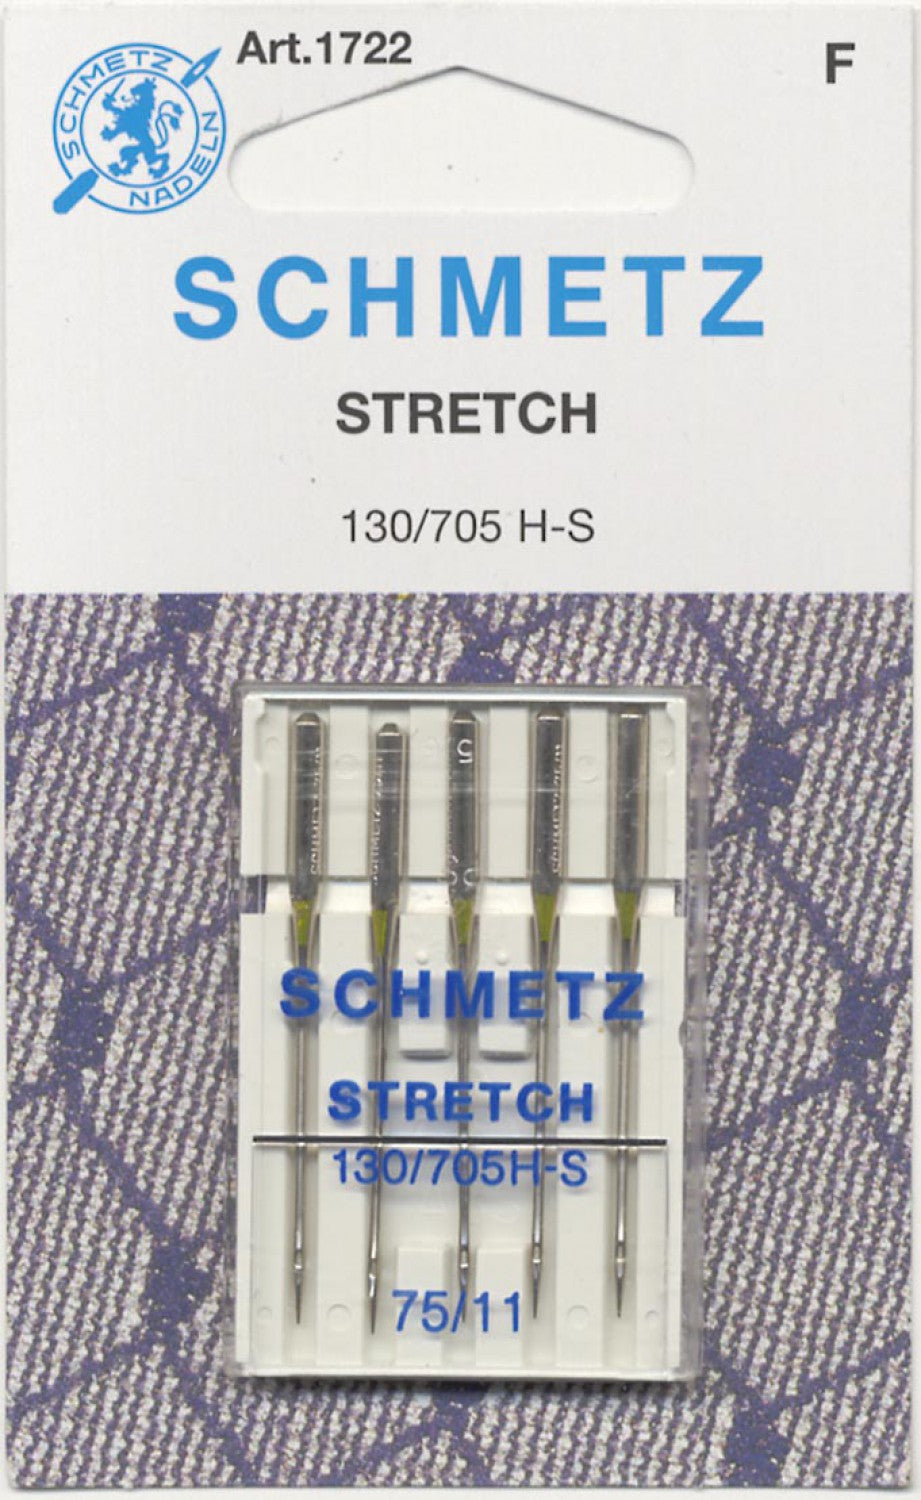 Schmetz Stretch Needle - 75/11 - 1 Package of 5 Needles